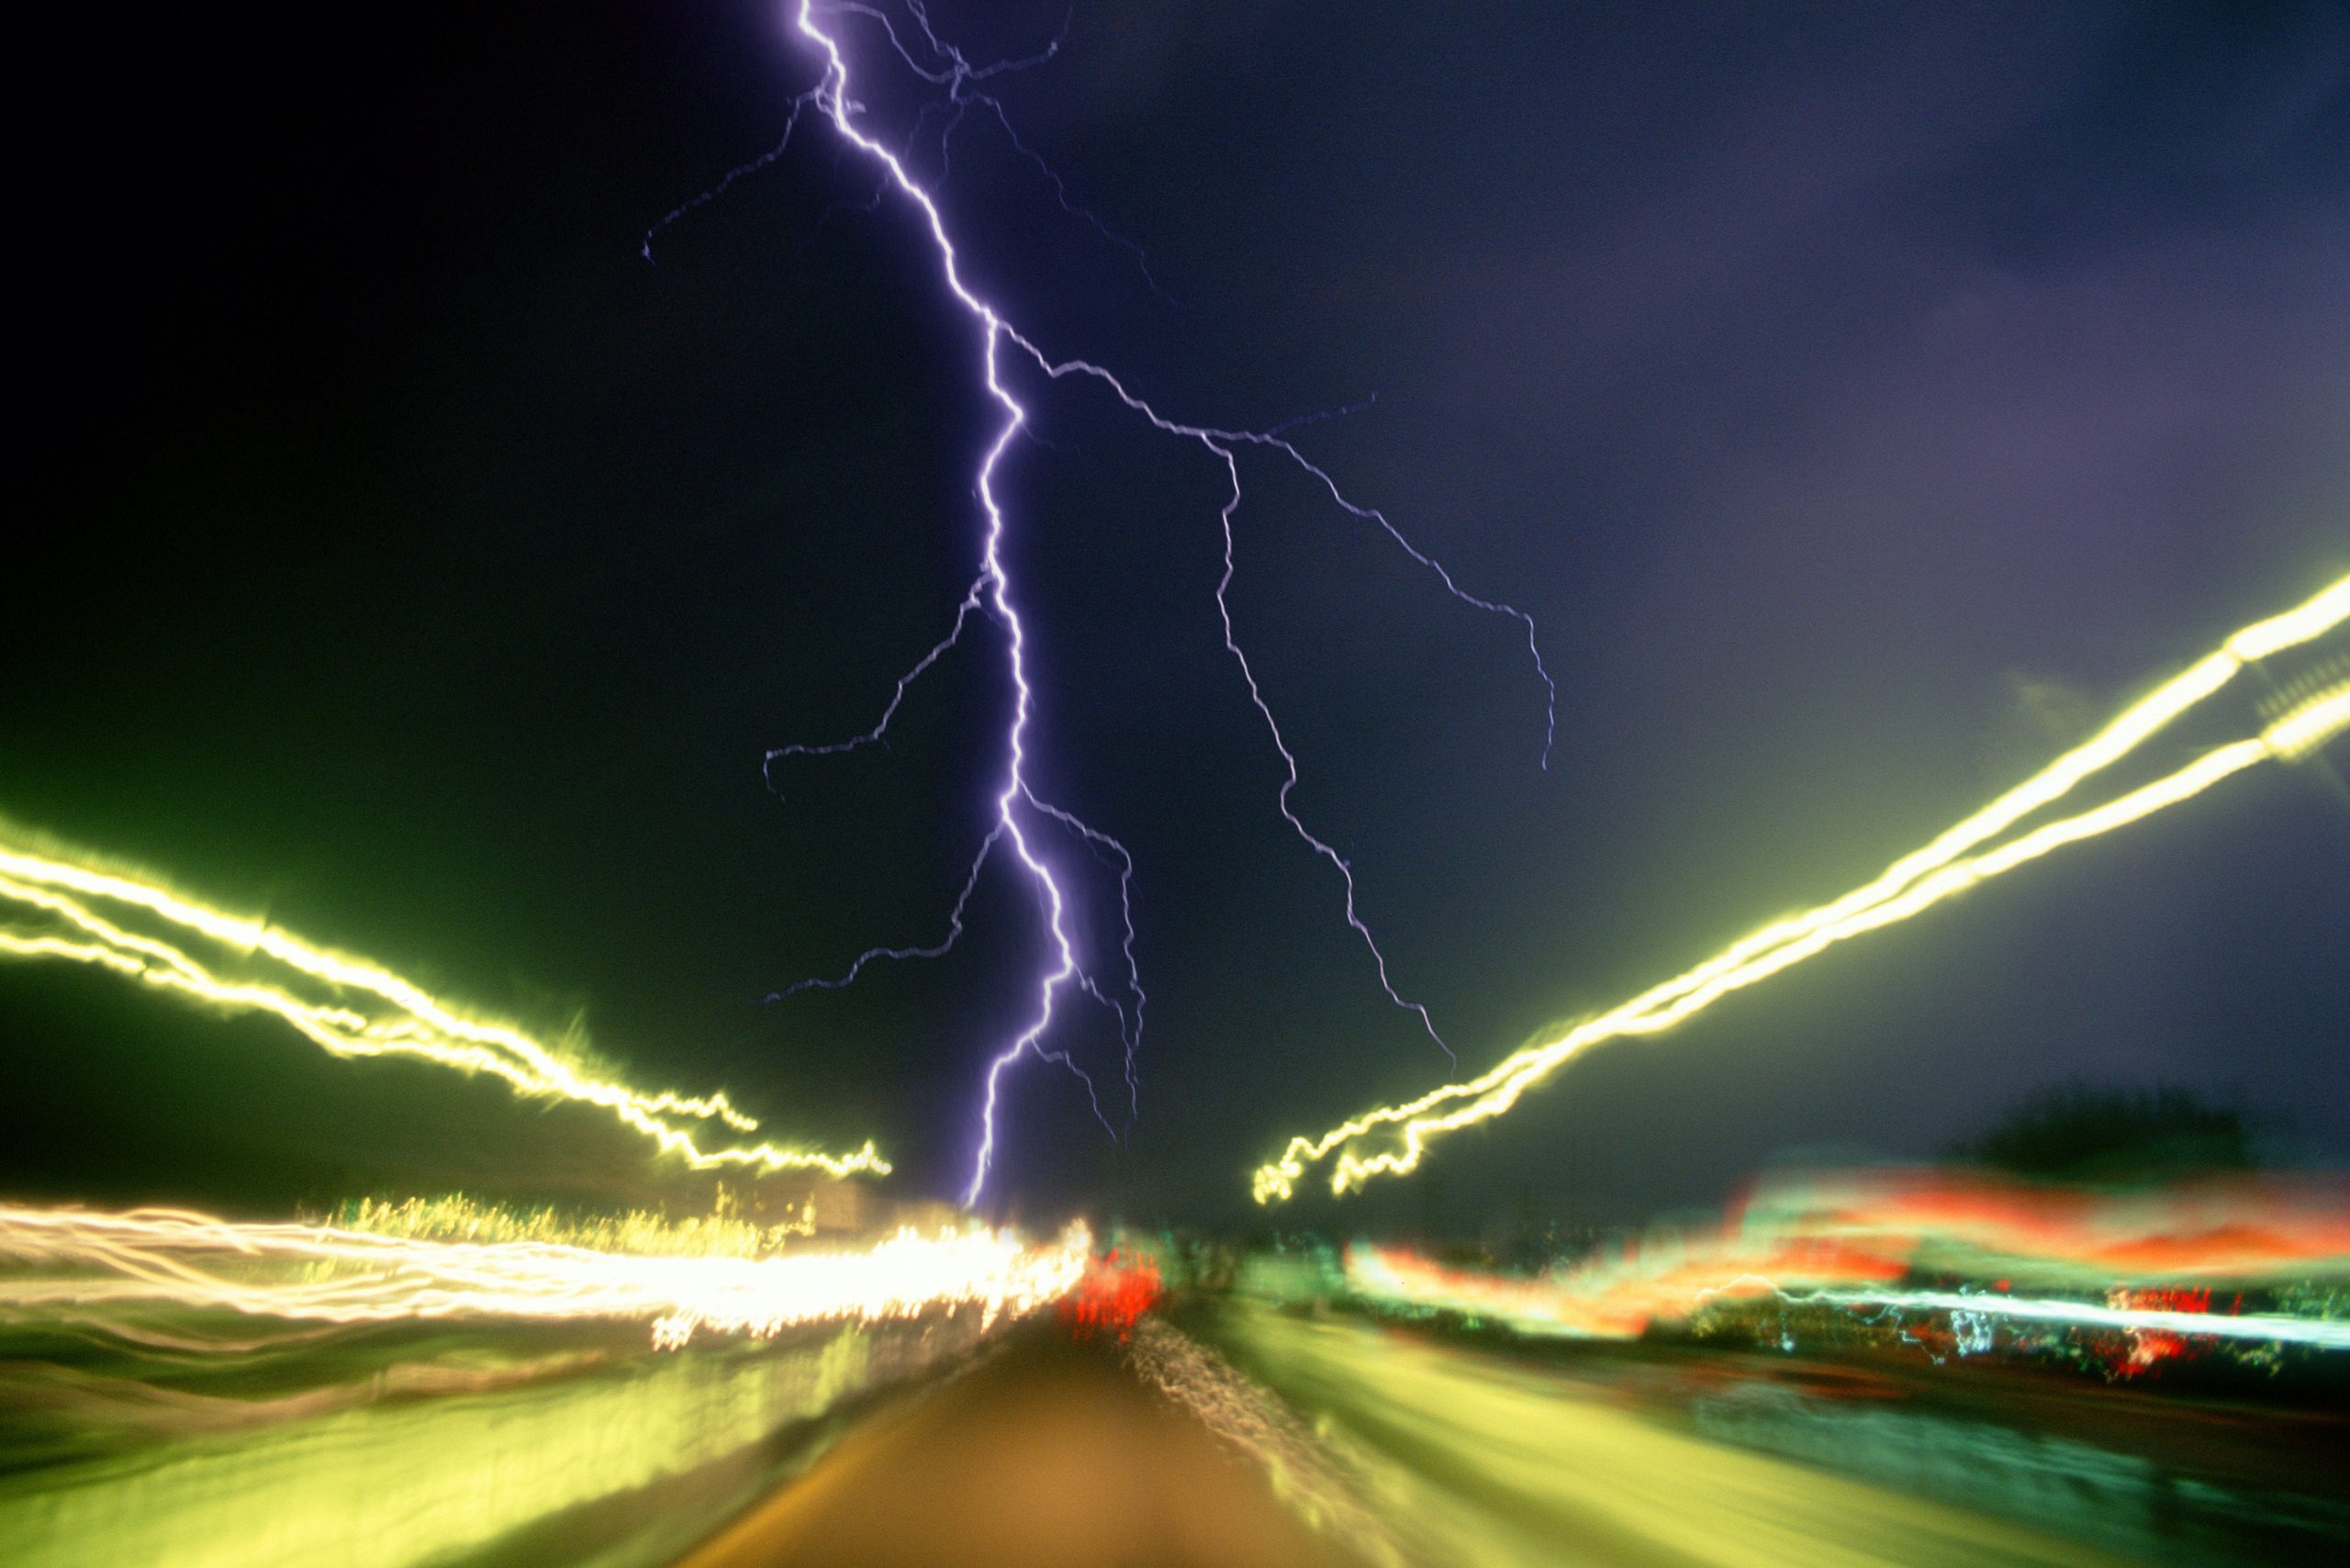 A lightning storm over a freeway